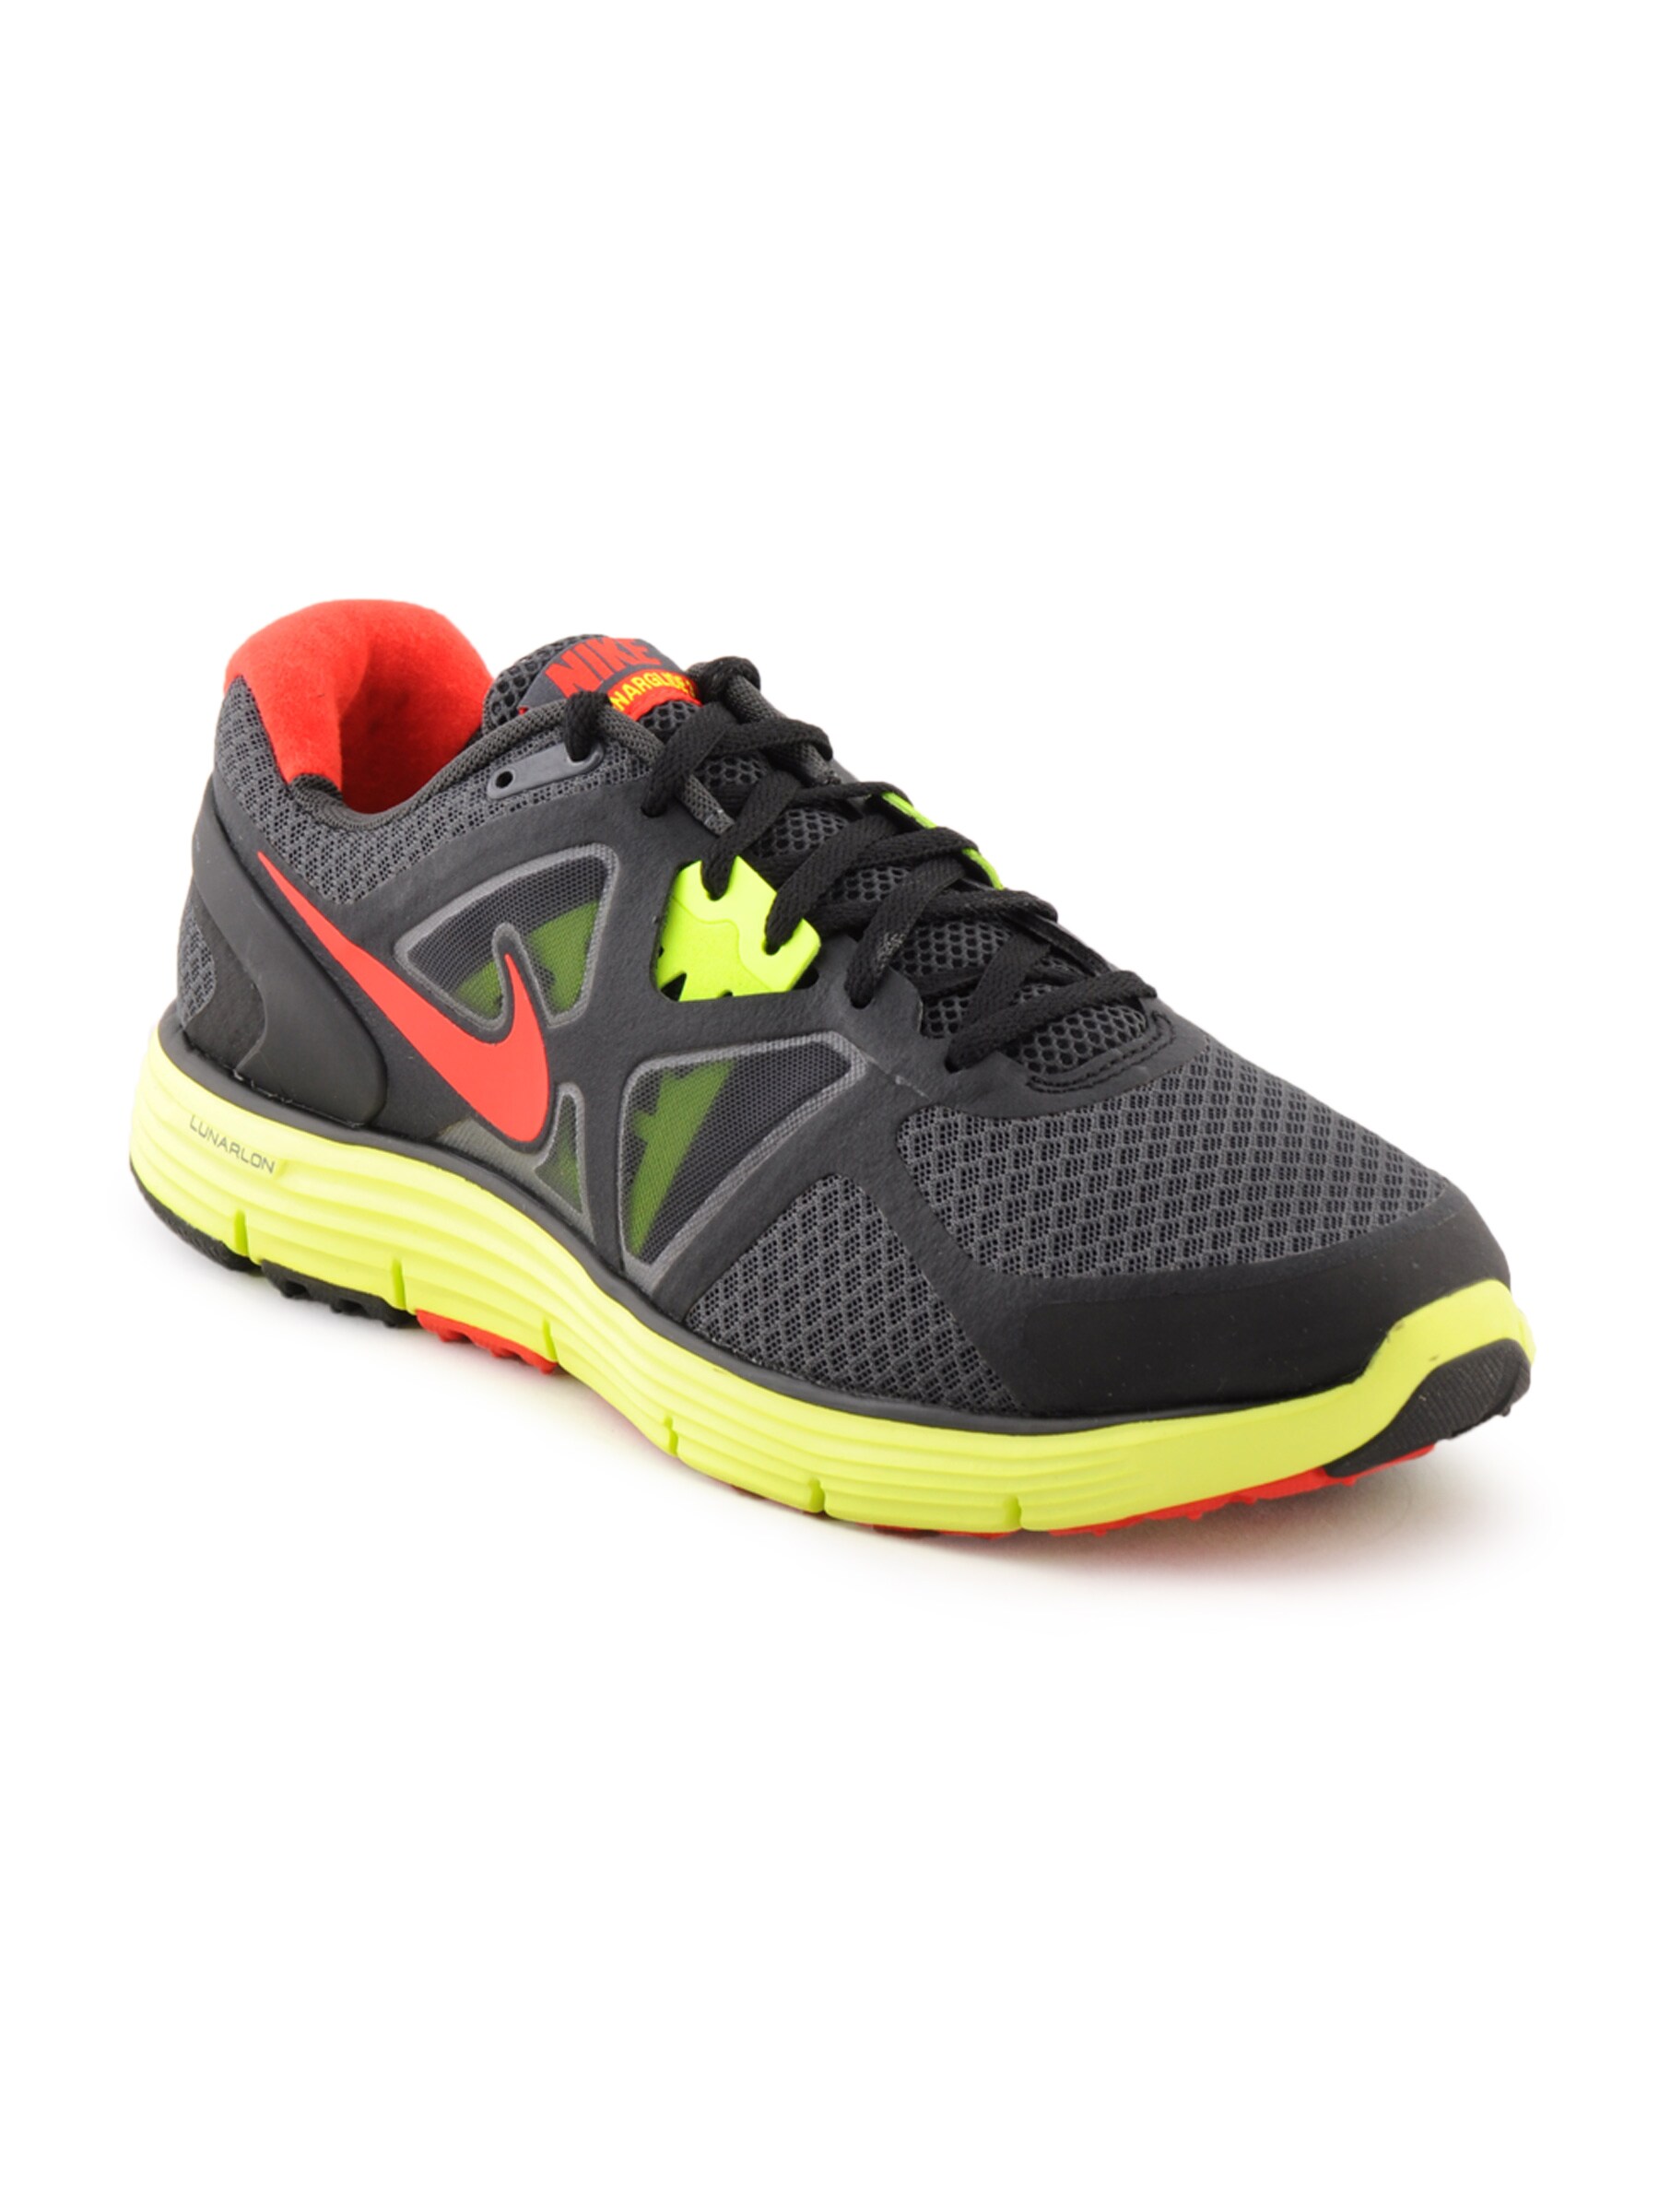 Nike Men Lunarglide Black Sports Shoes